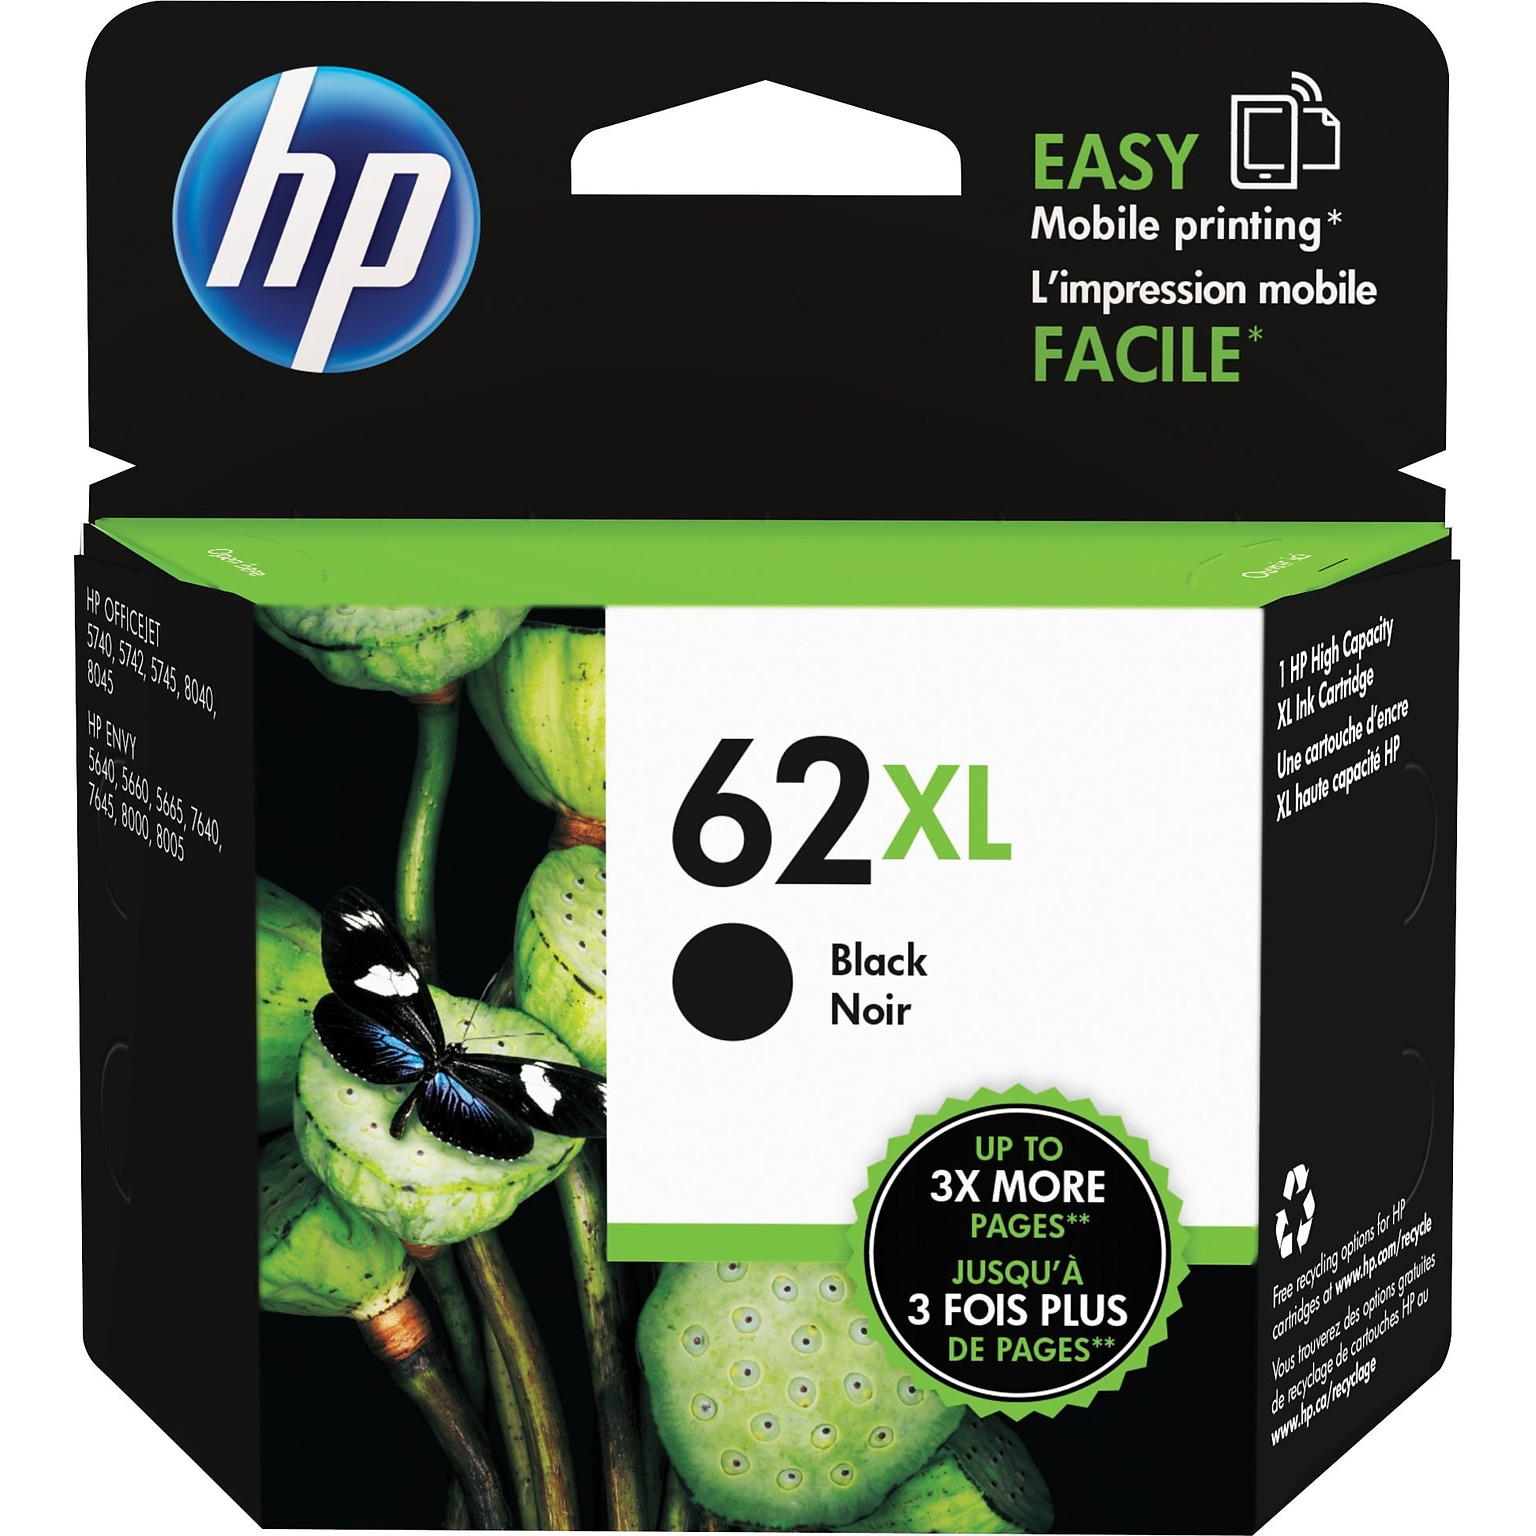 HP 62XL Ink Cartridge Black High Yield (C2P05AN#140) | Quill.com